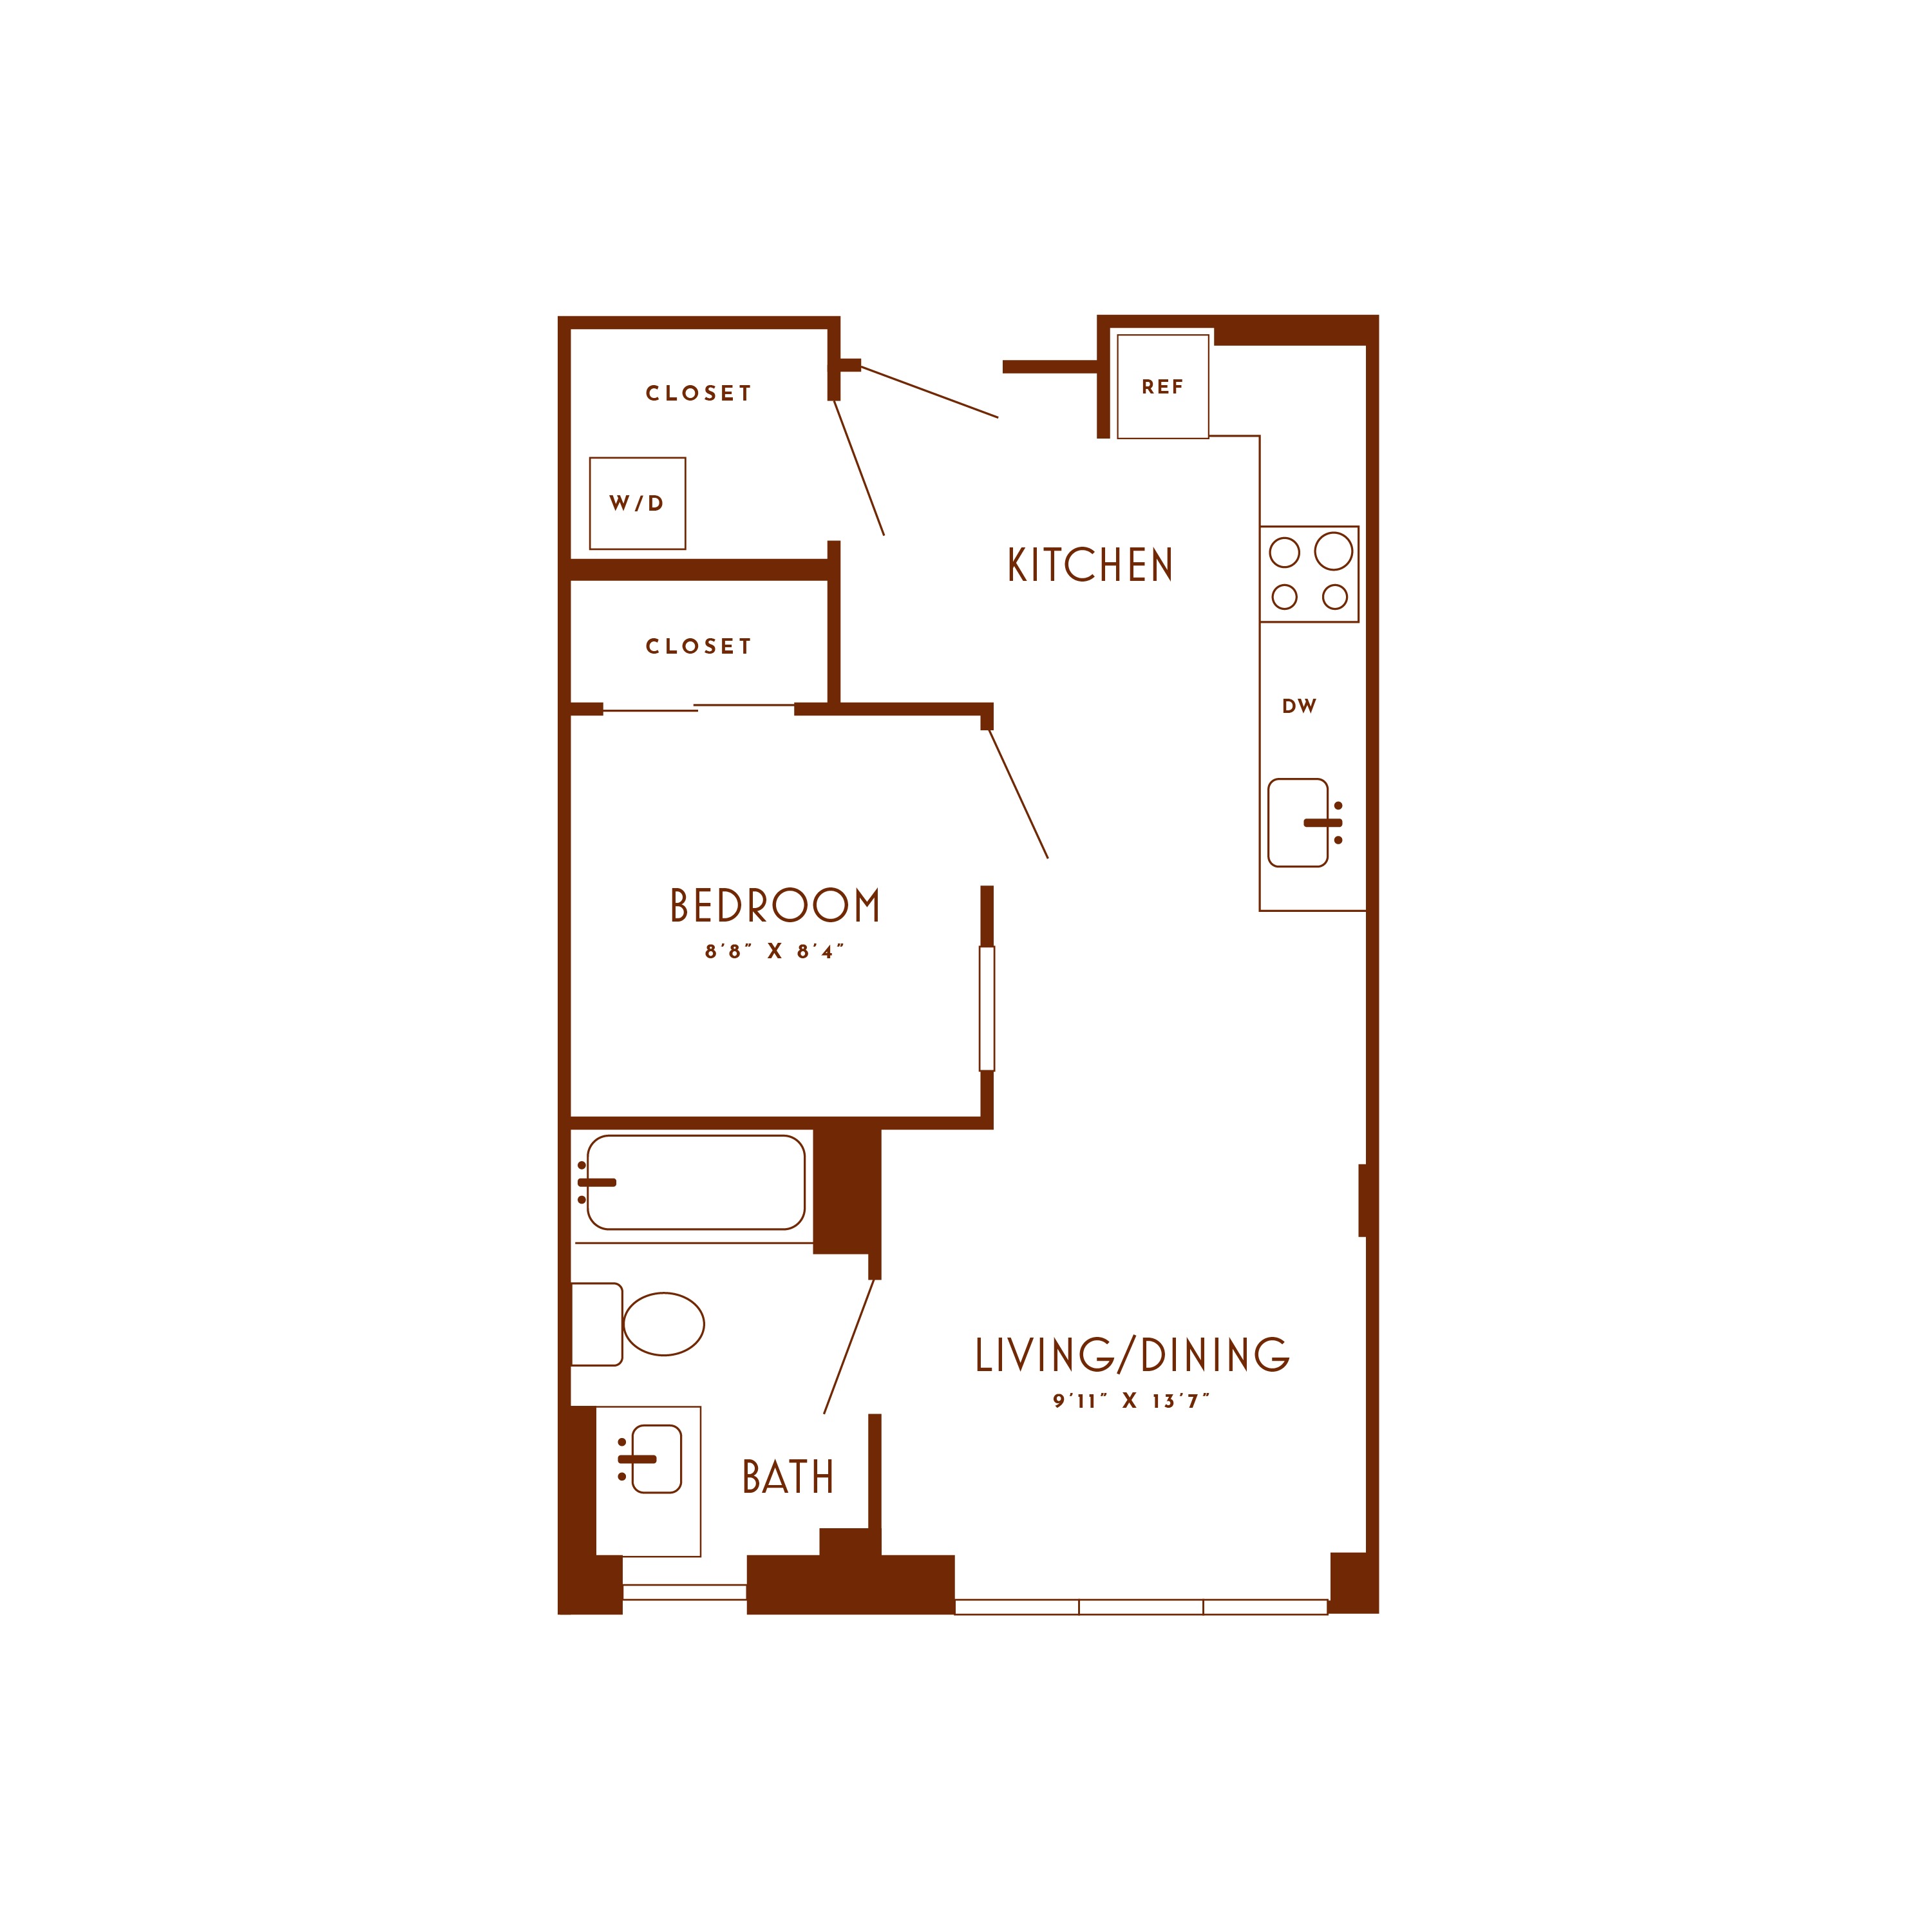 Floor plan image of unit 214